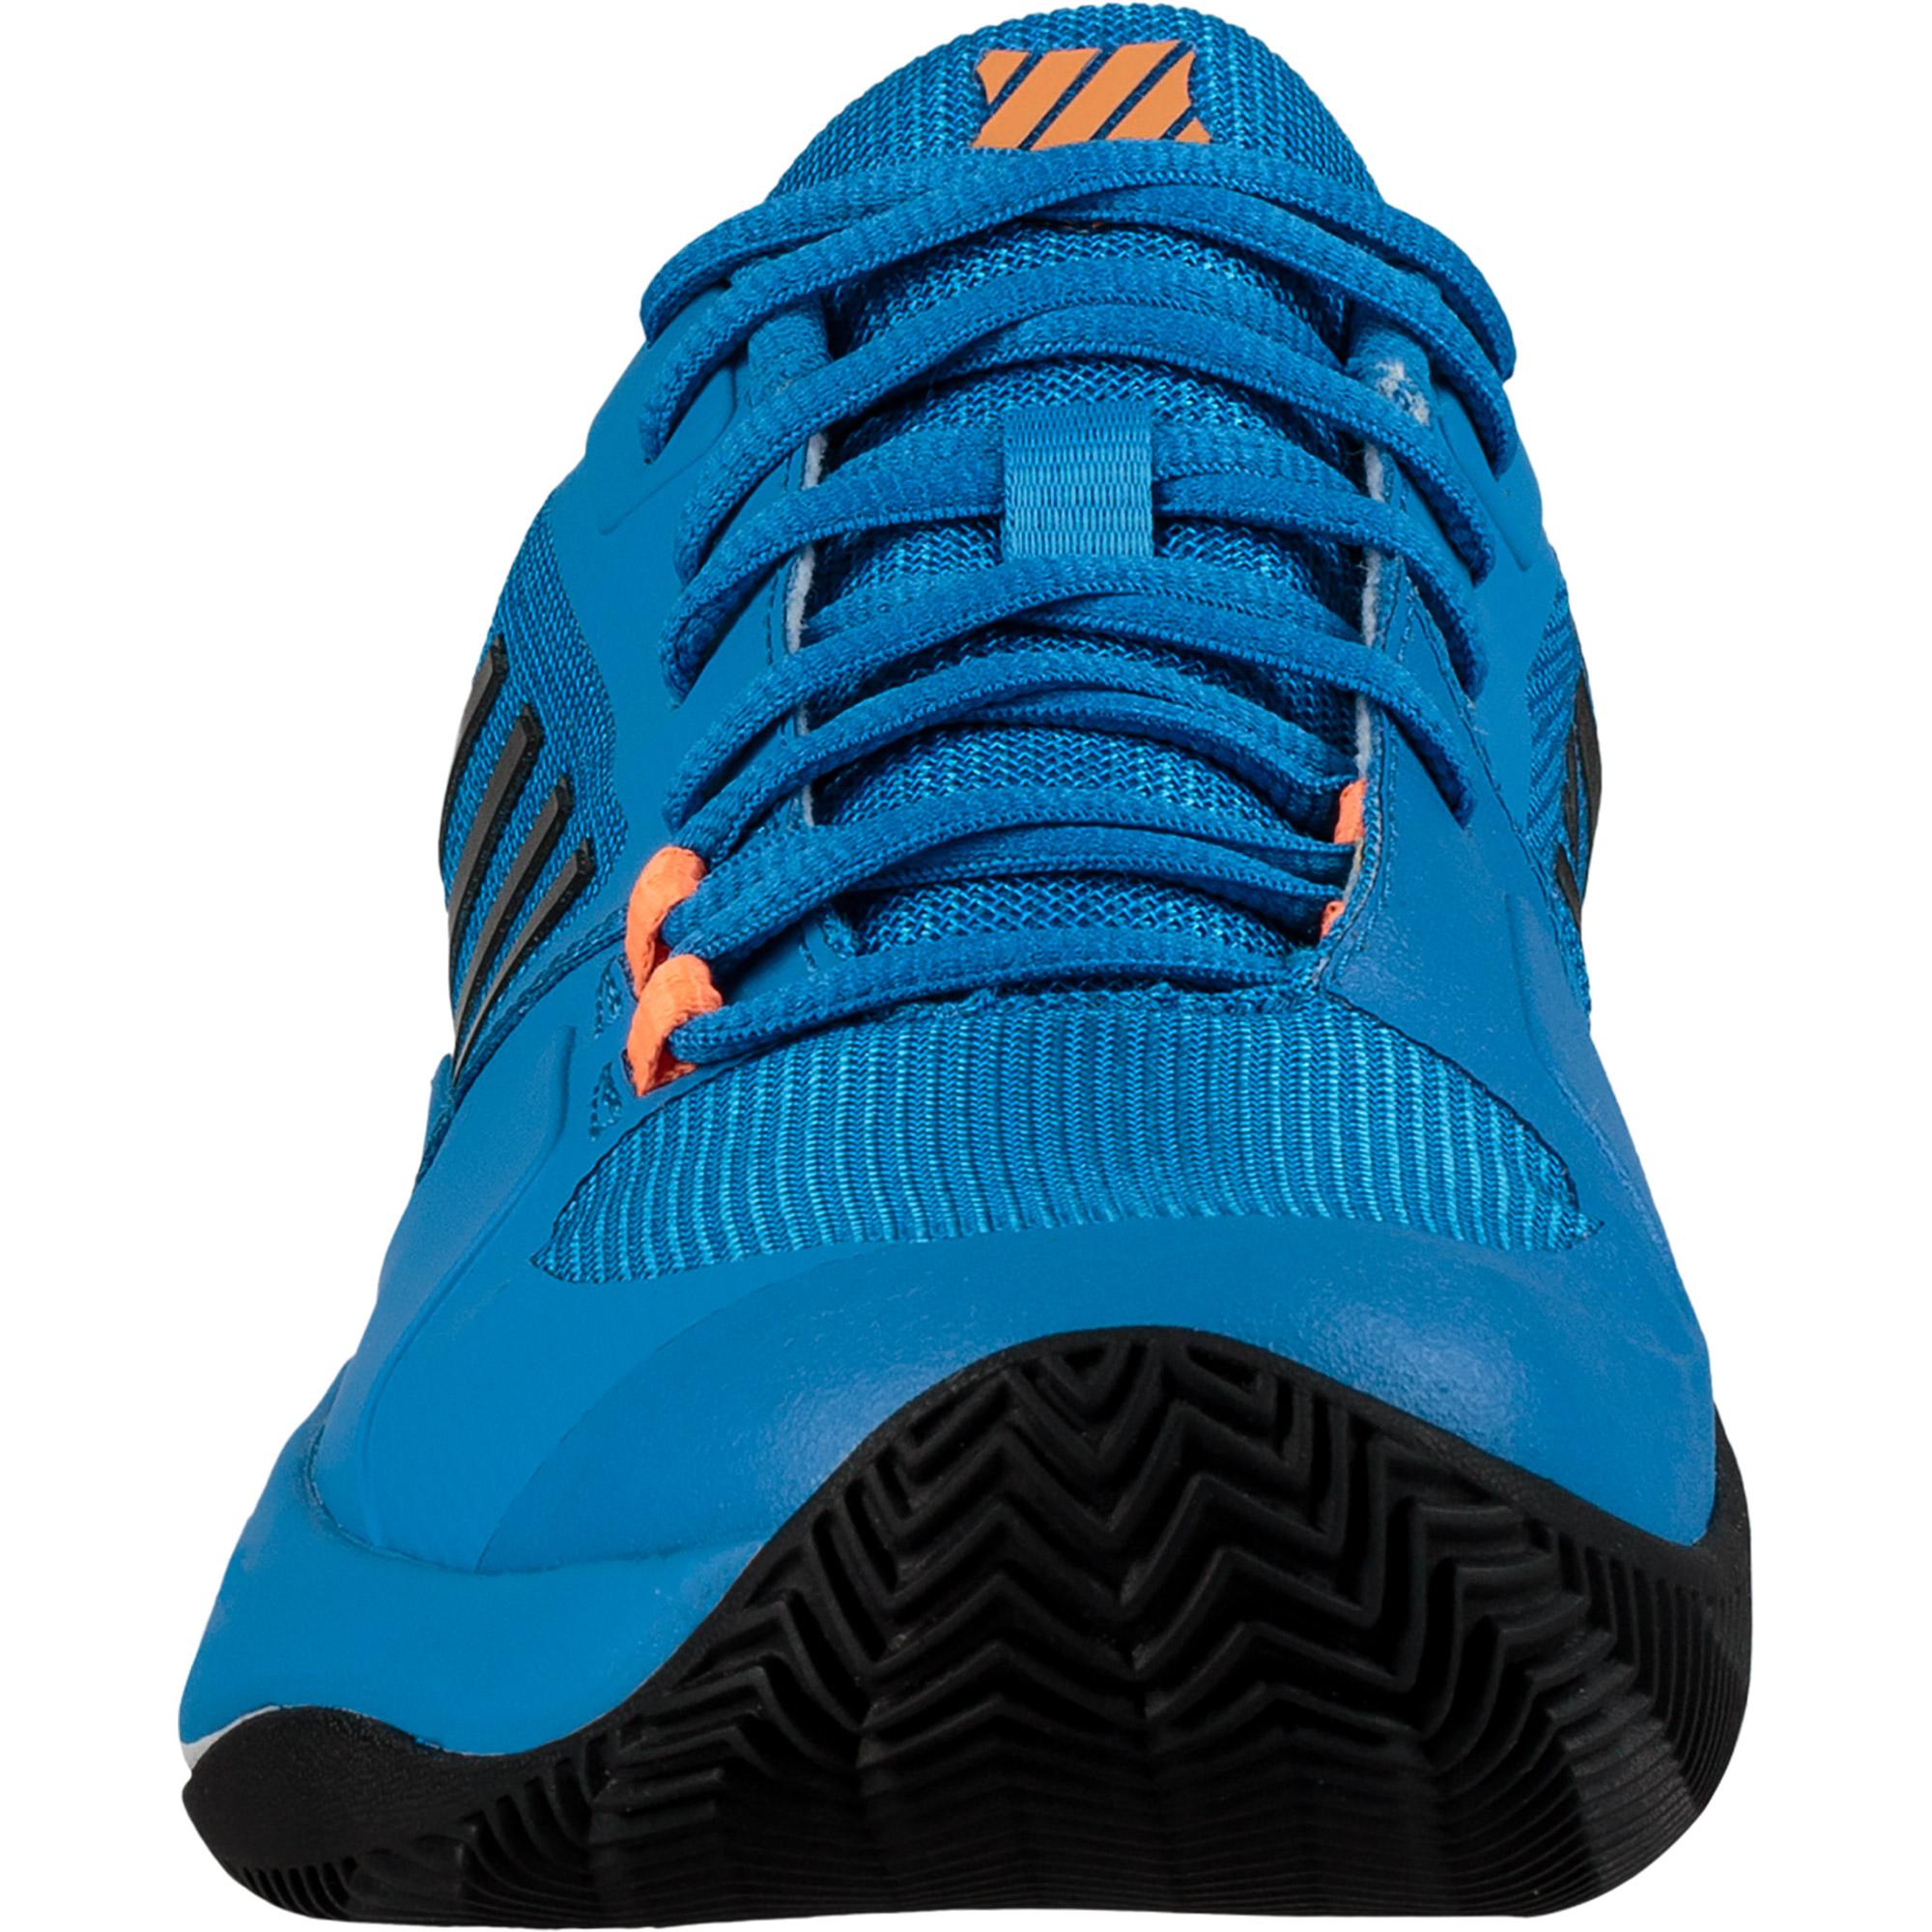 K-Swiss Aero Court Men's Tennis Shoes Sneakers Brilliant Blue/Neon Orange 